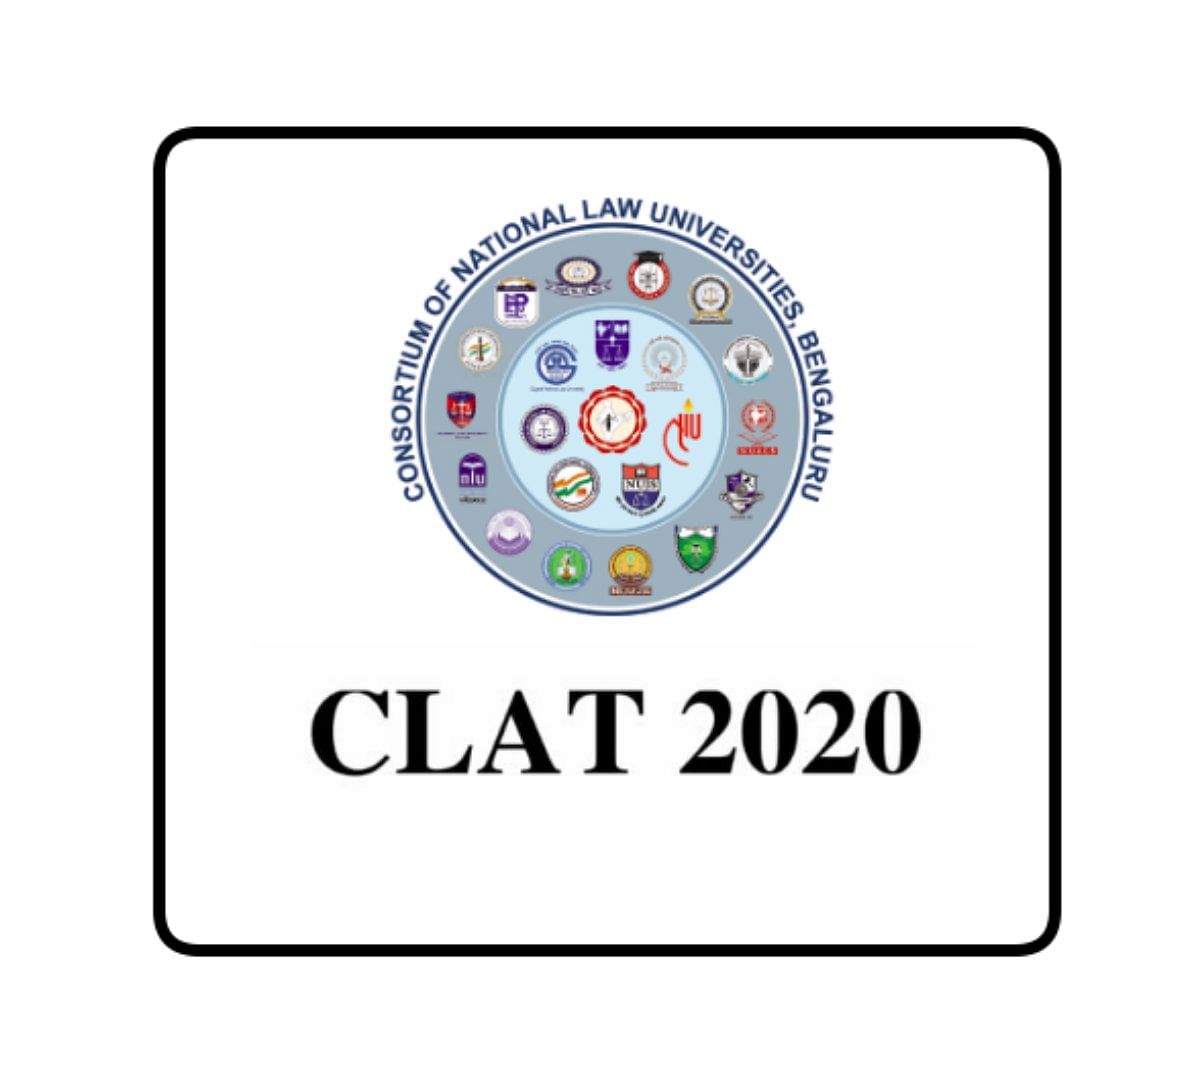 CLAT 2020: Examination Postponed Again, Check Latest Update